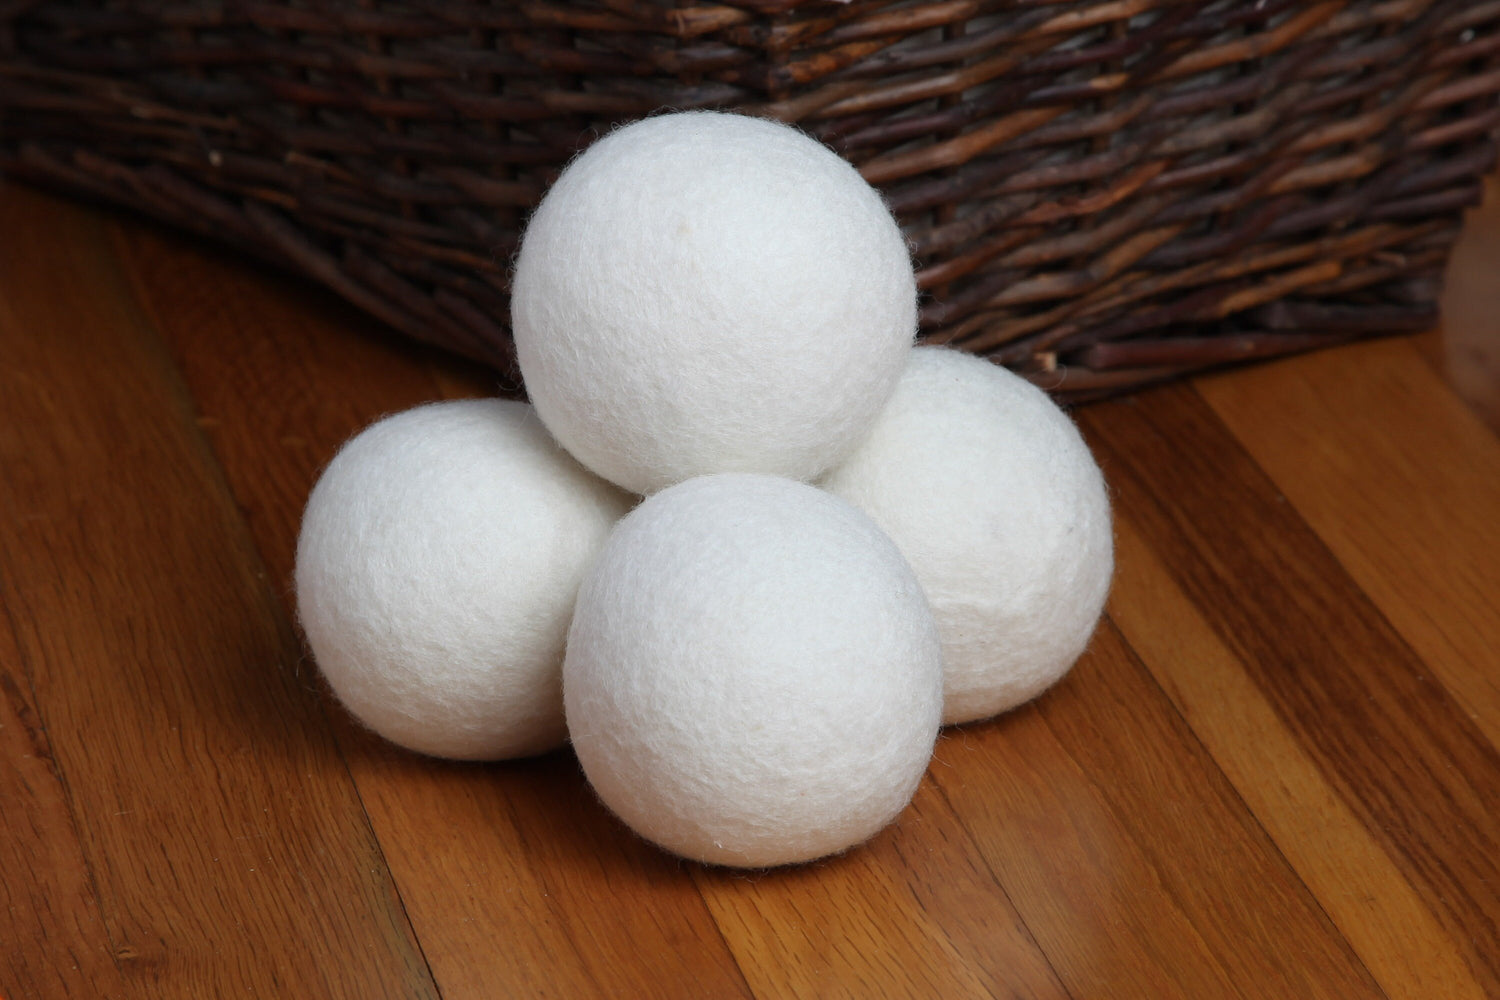 Wholesale Wool Dryer Balls 100 ct, Bulk Wool Dryer Ball, Wool Dryer Ba –  Shep's Wool